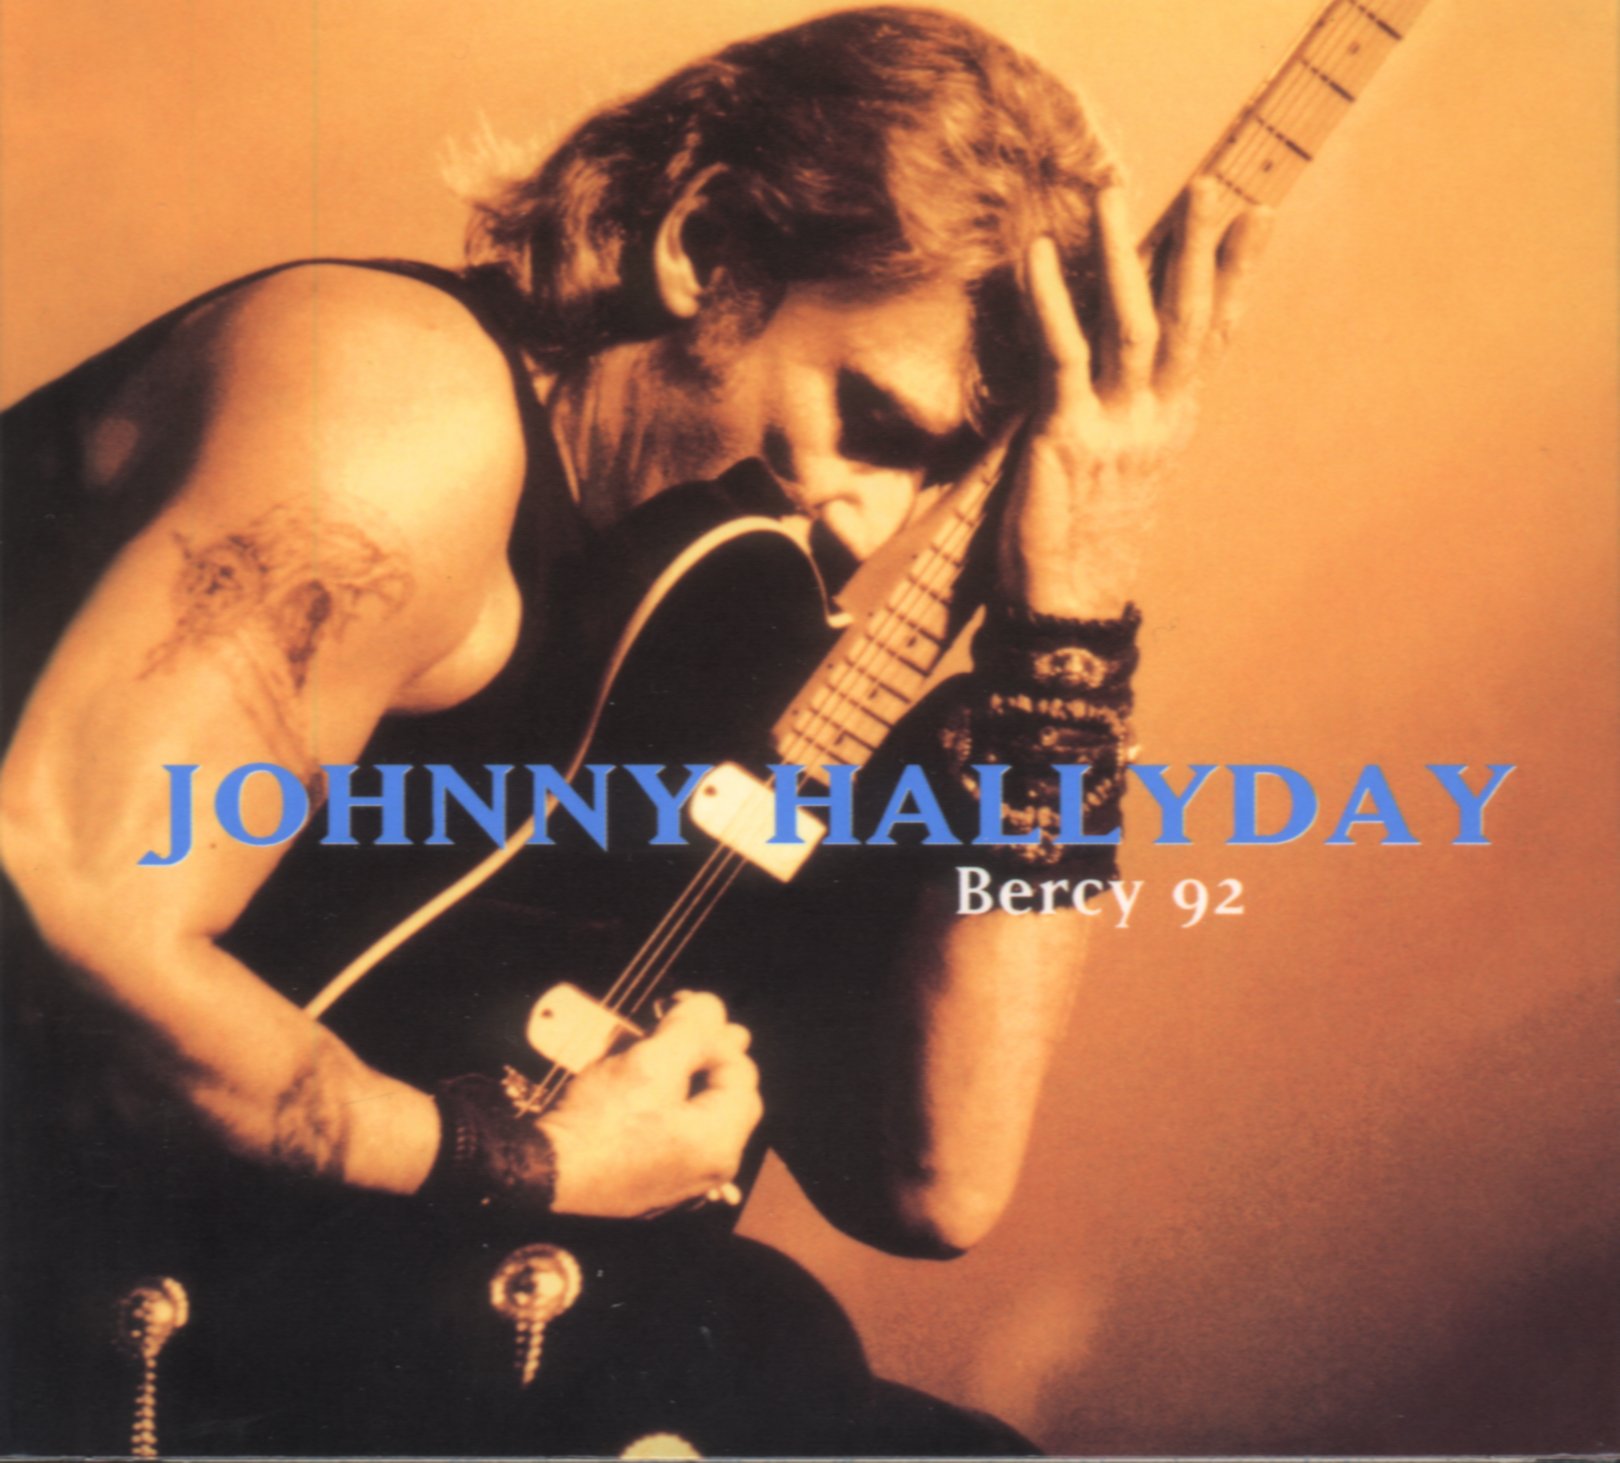 Johnny hallyday - Bercy 92